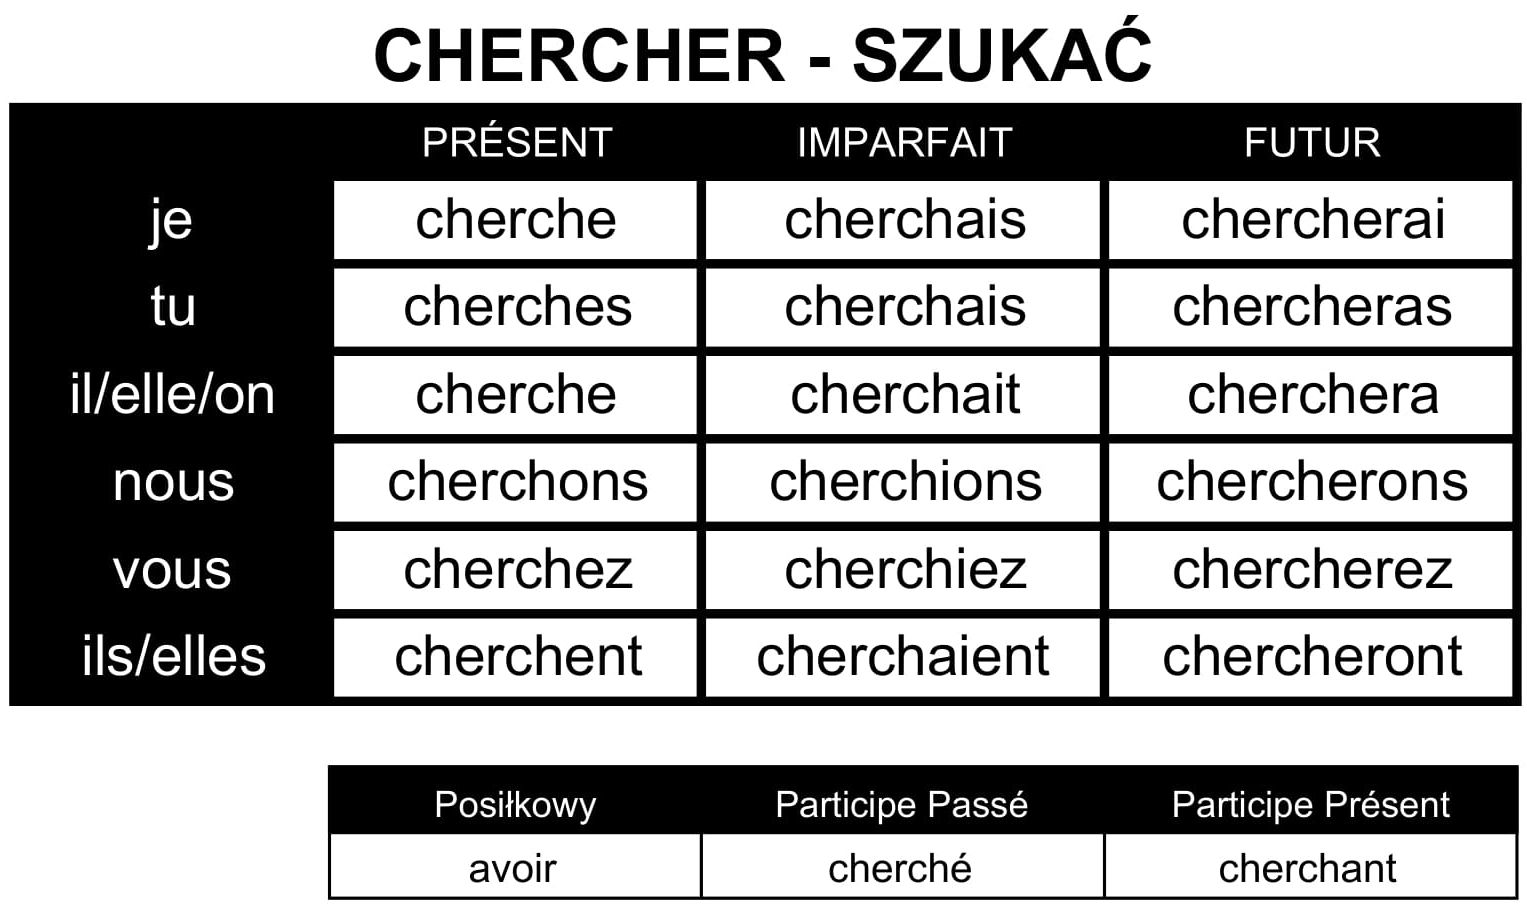 Chercher